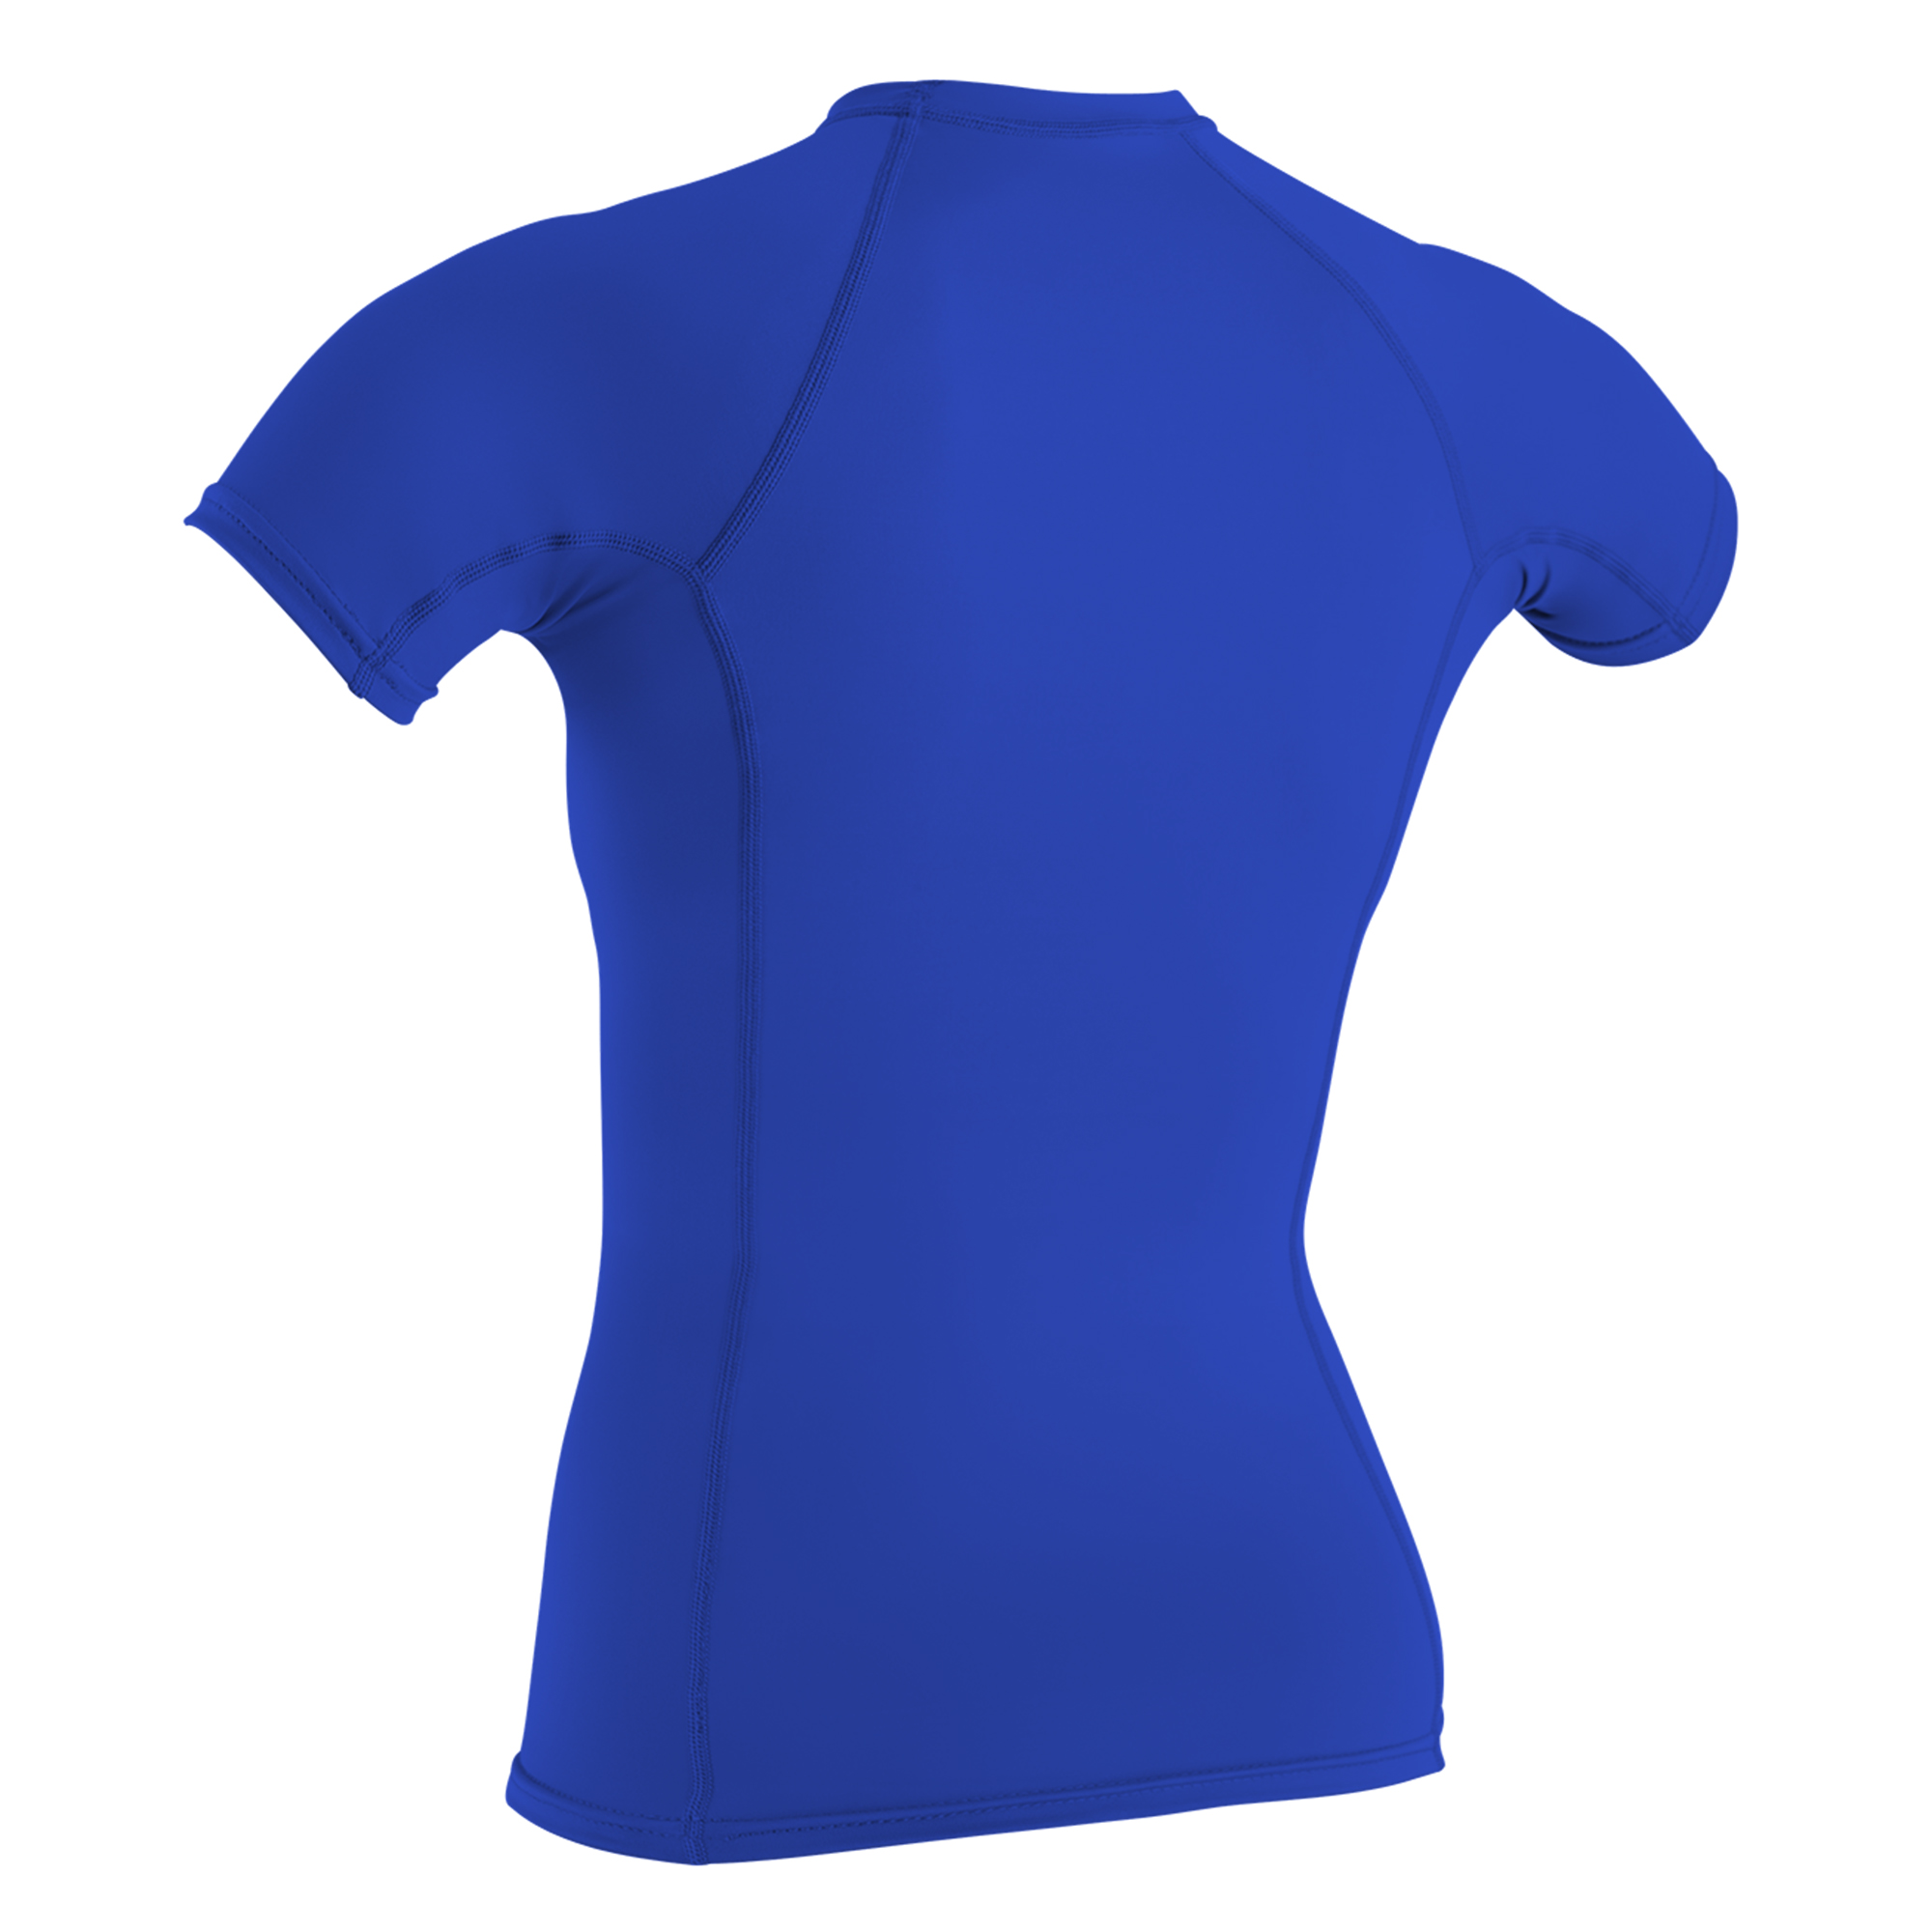 O'Neill Women's Basic Skins 50+ Short Sleeve Rash Guard - image 5 of 6